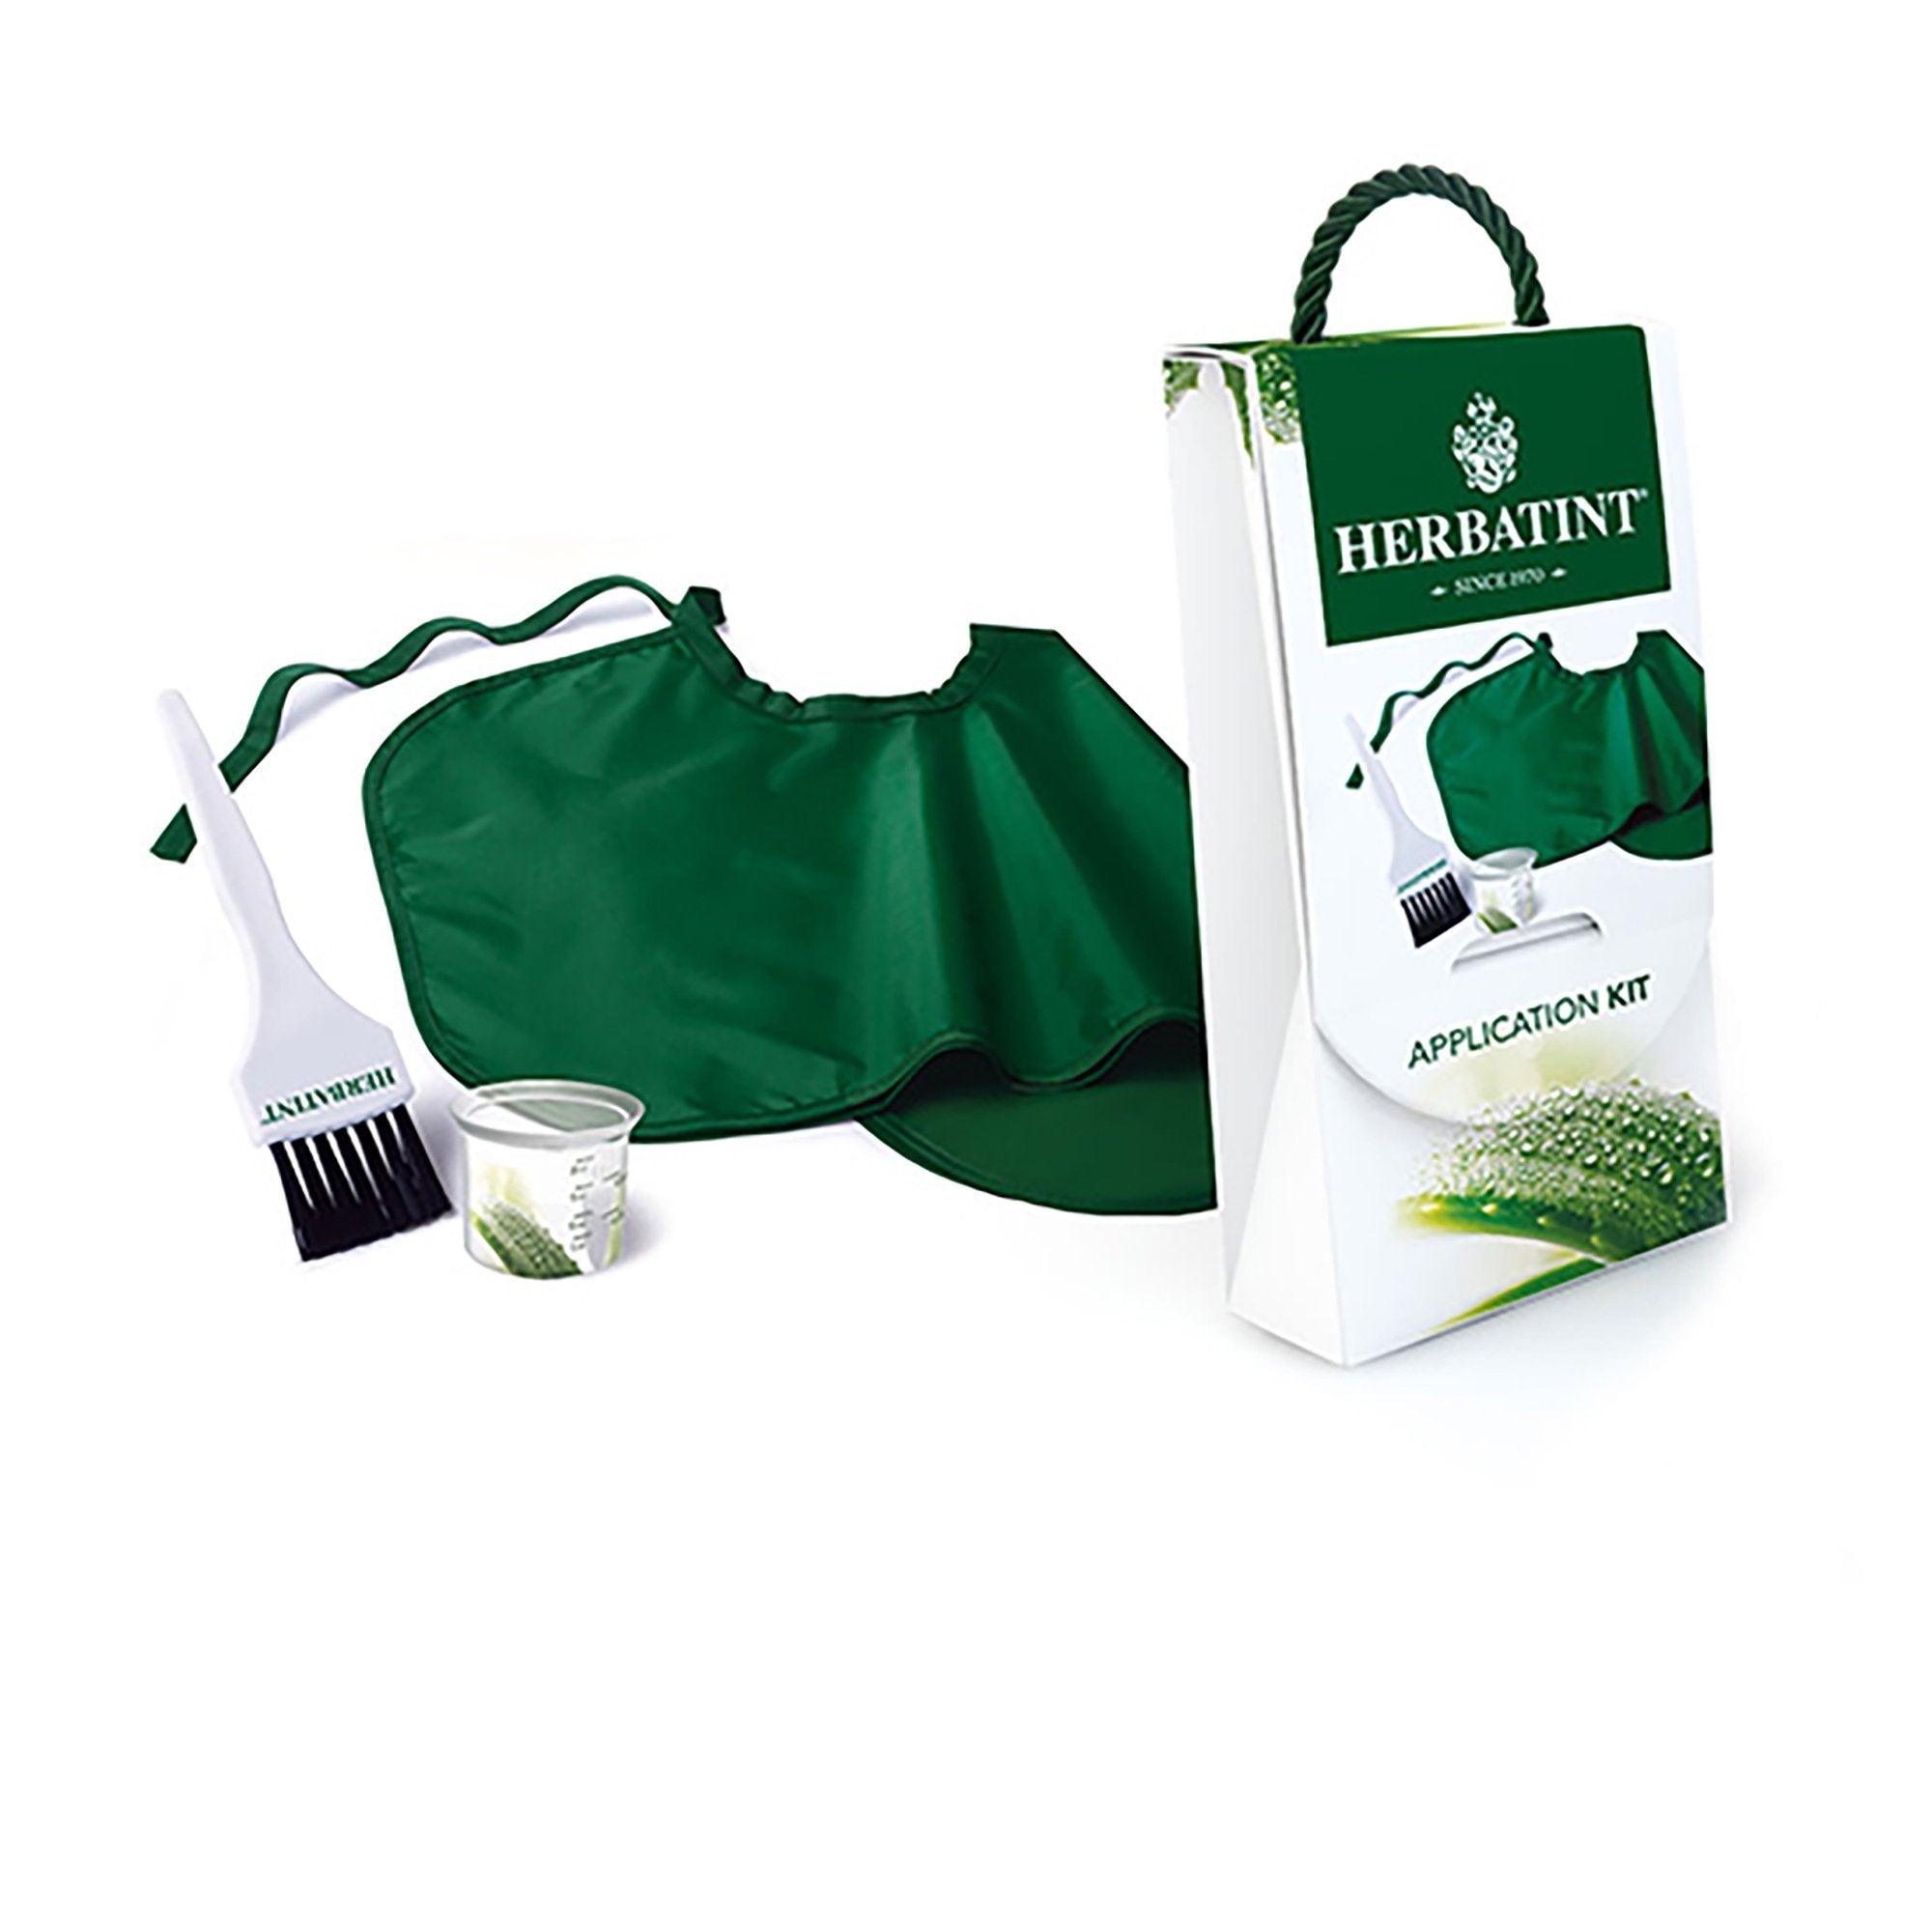 Herbatint Application kit - A.Vogel Canada